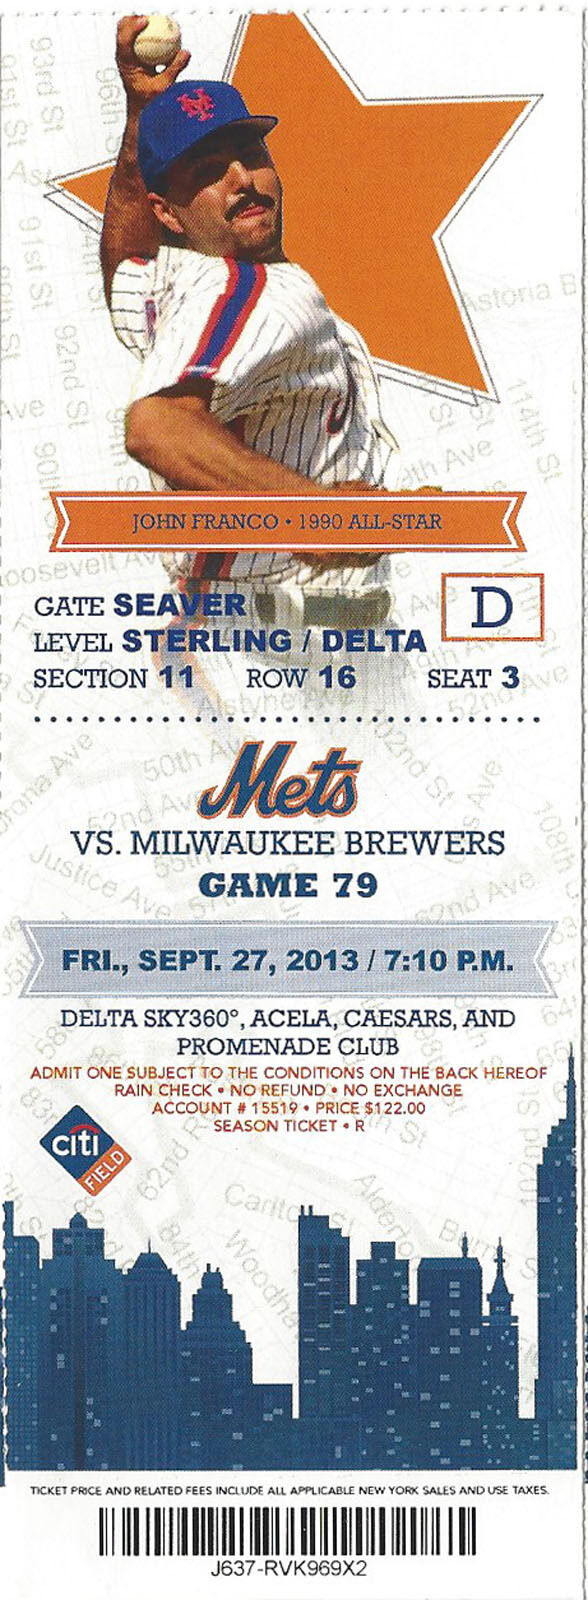 John Franco 1990 All-Star Mets vs. Brewers Citi Stub Sept 27 2013 Game 79